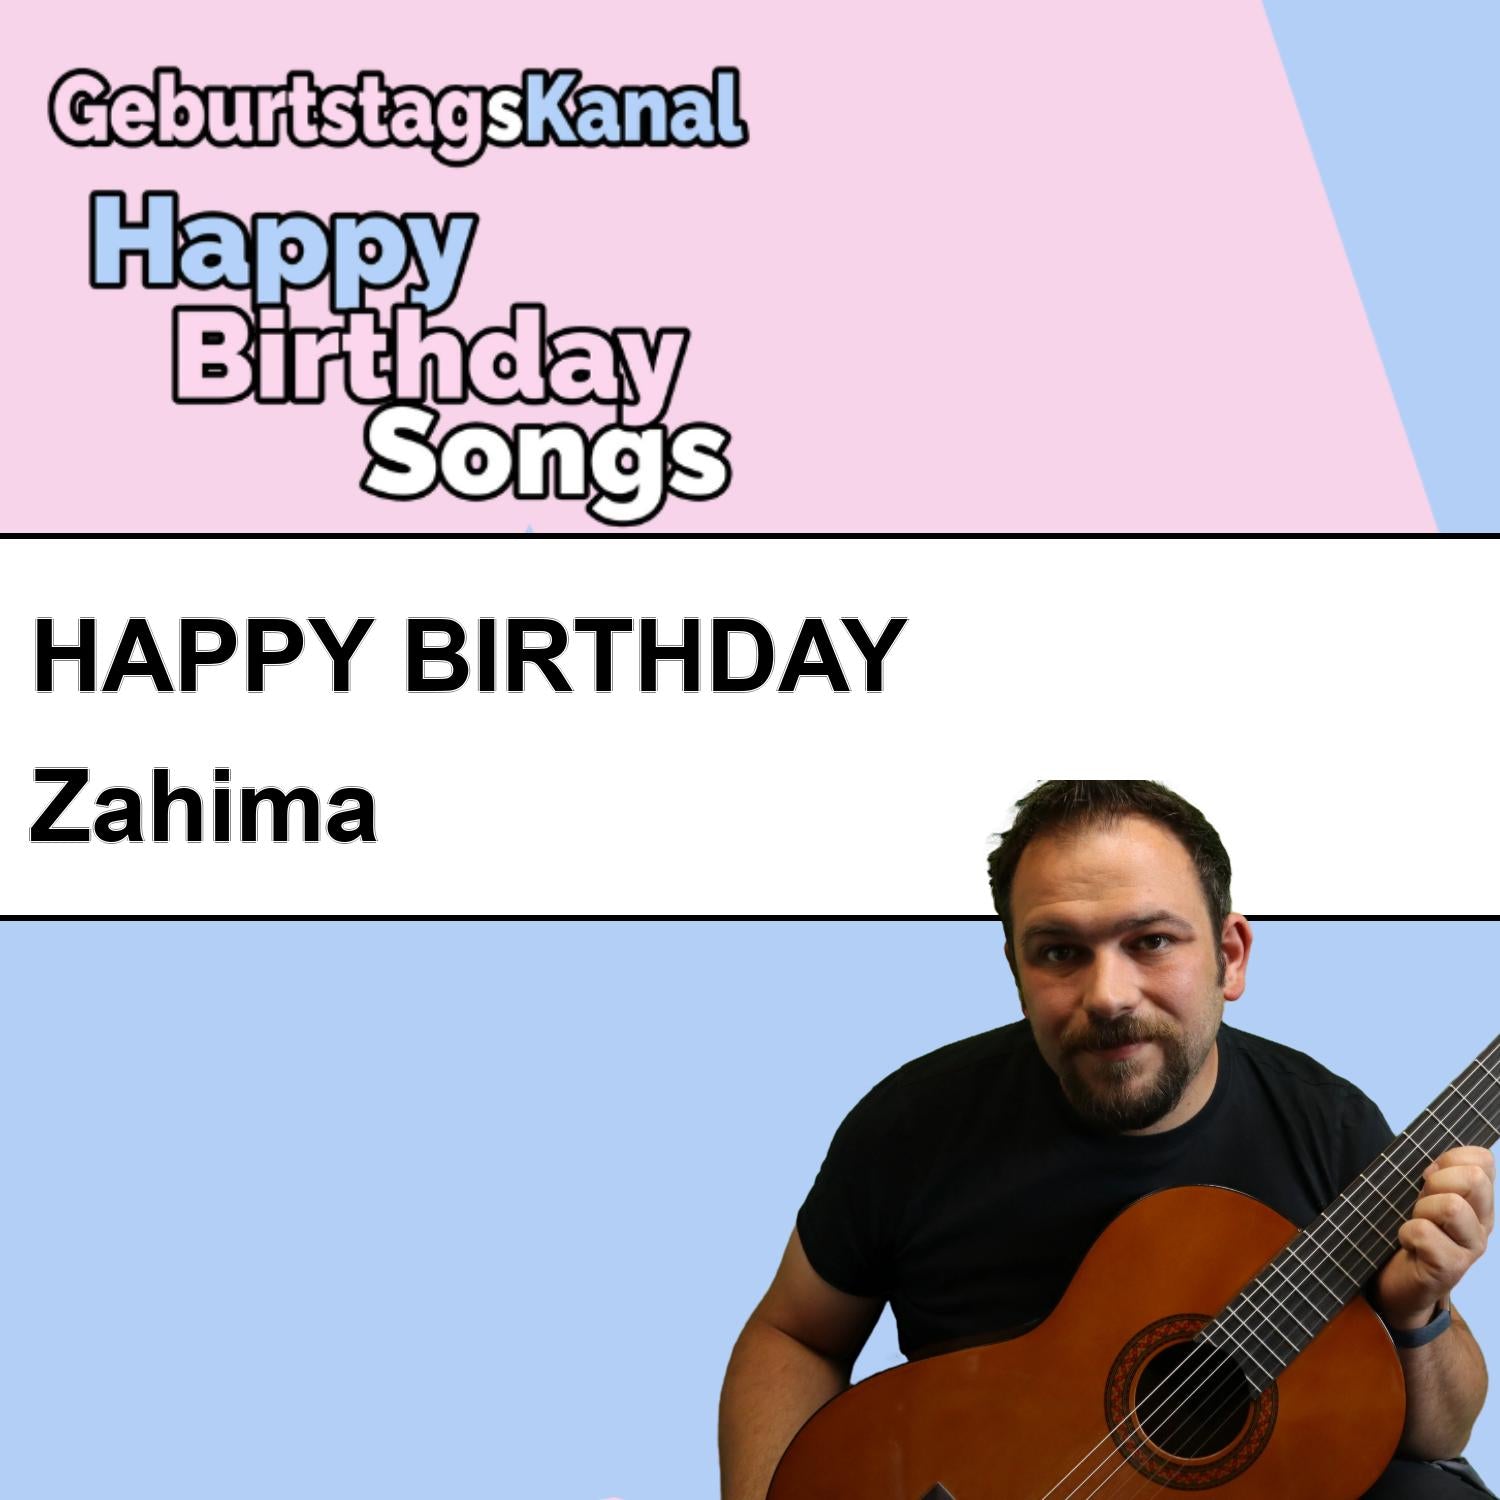 Produktbild Happy Birthday to you Zahima mit Wunschgrußbotschaft